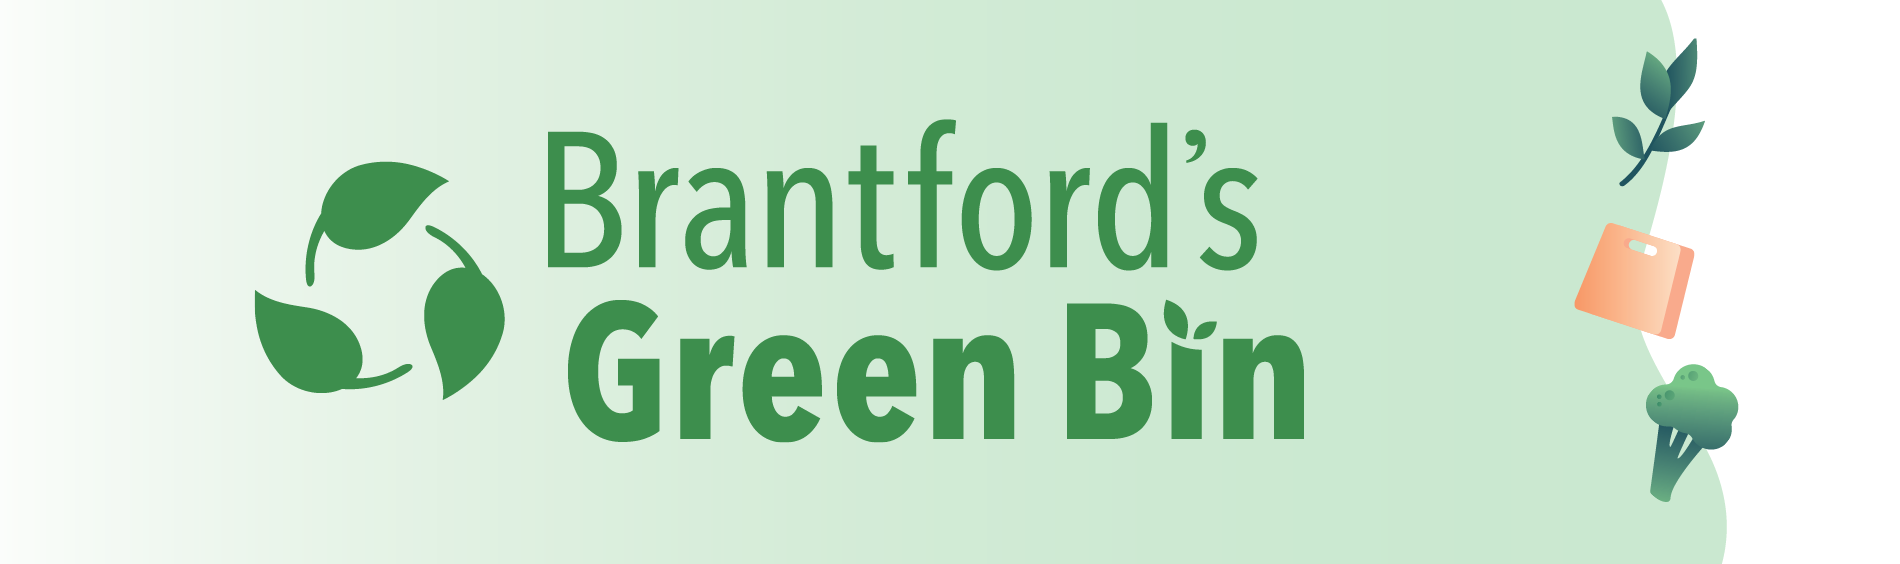 Brantford's Green Bin